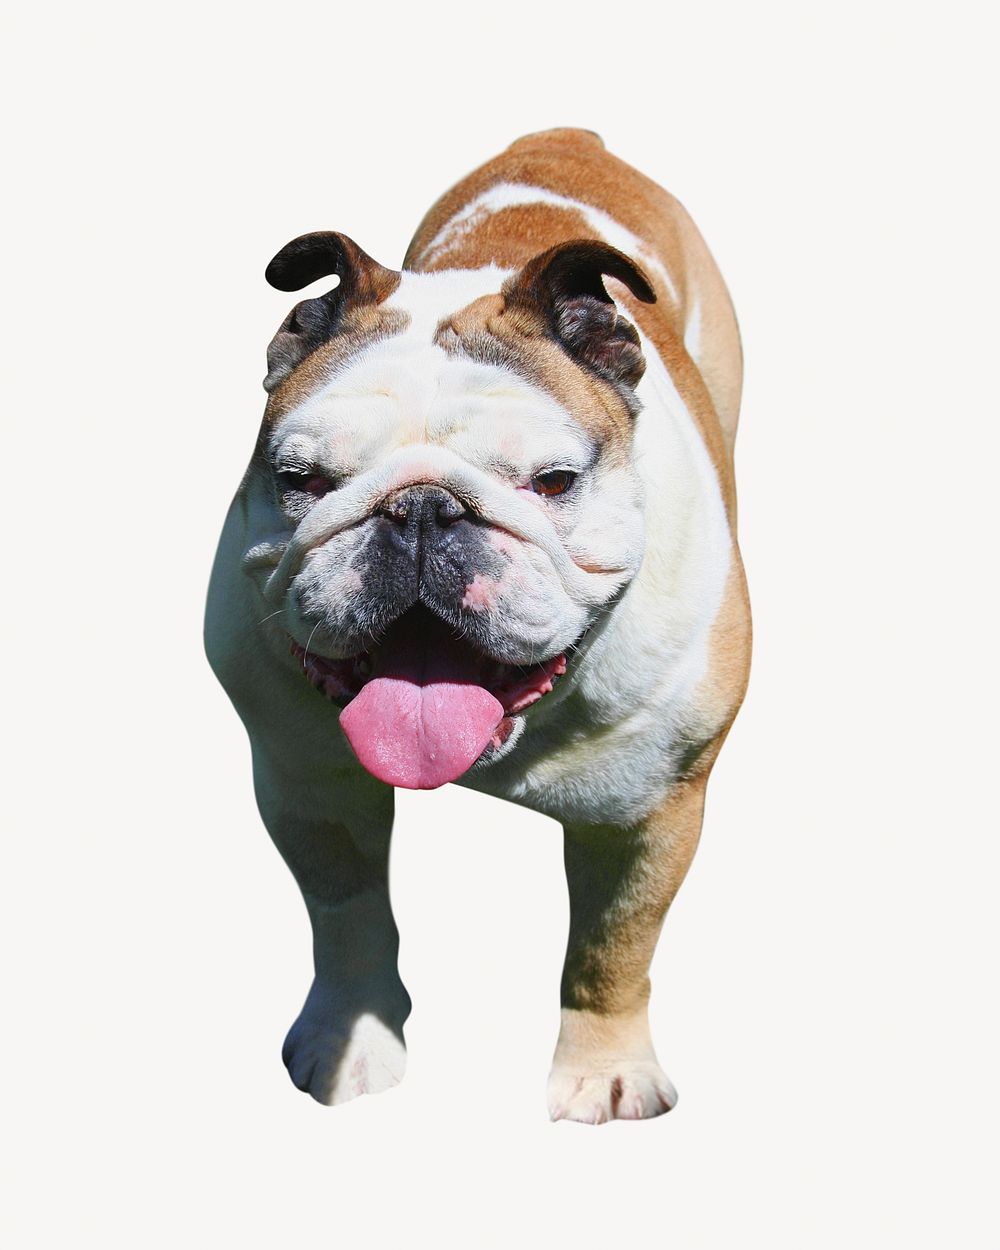 Bulldog, pet animal image